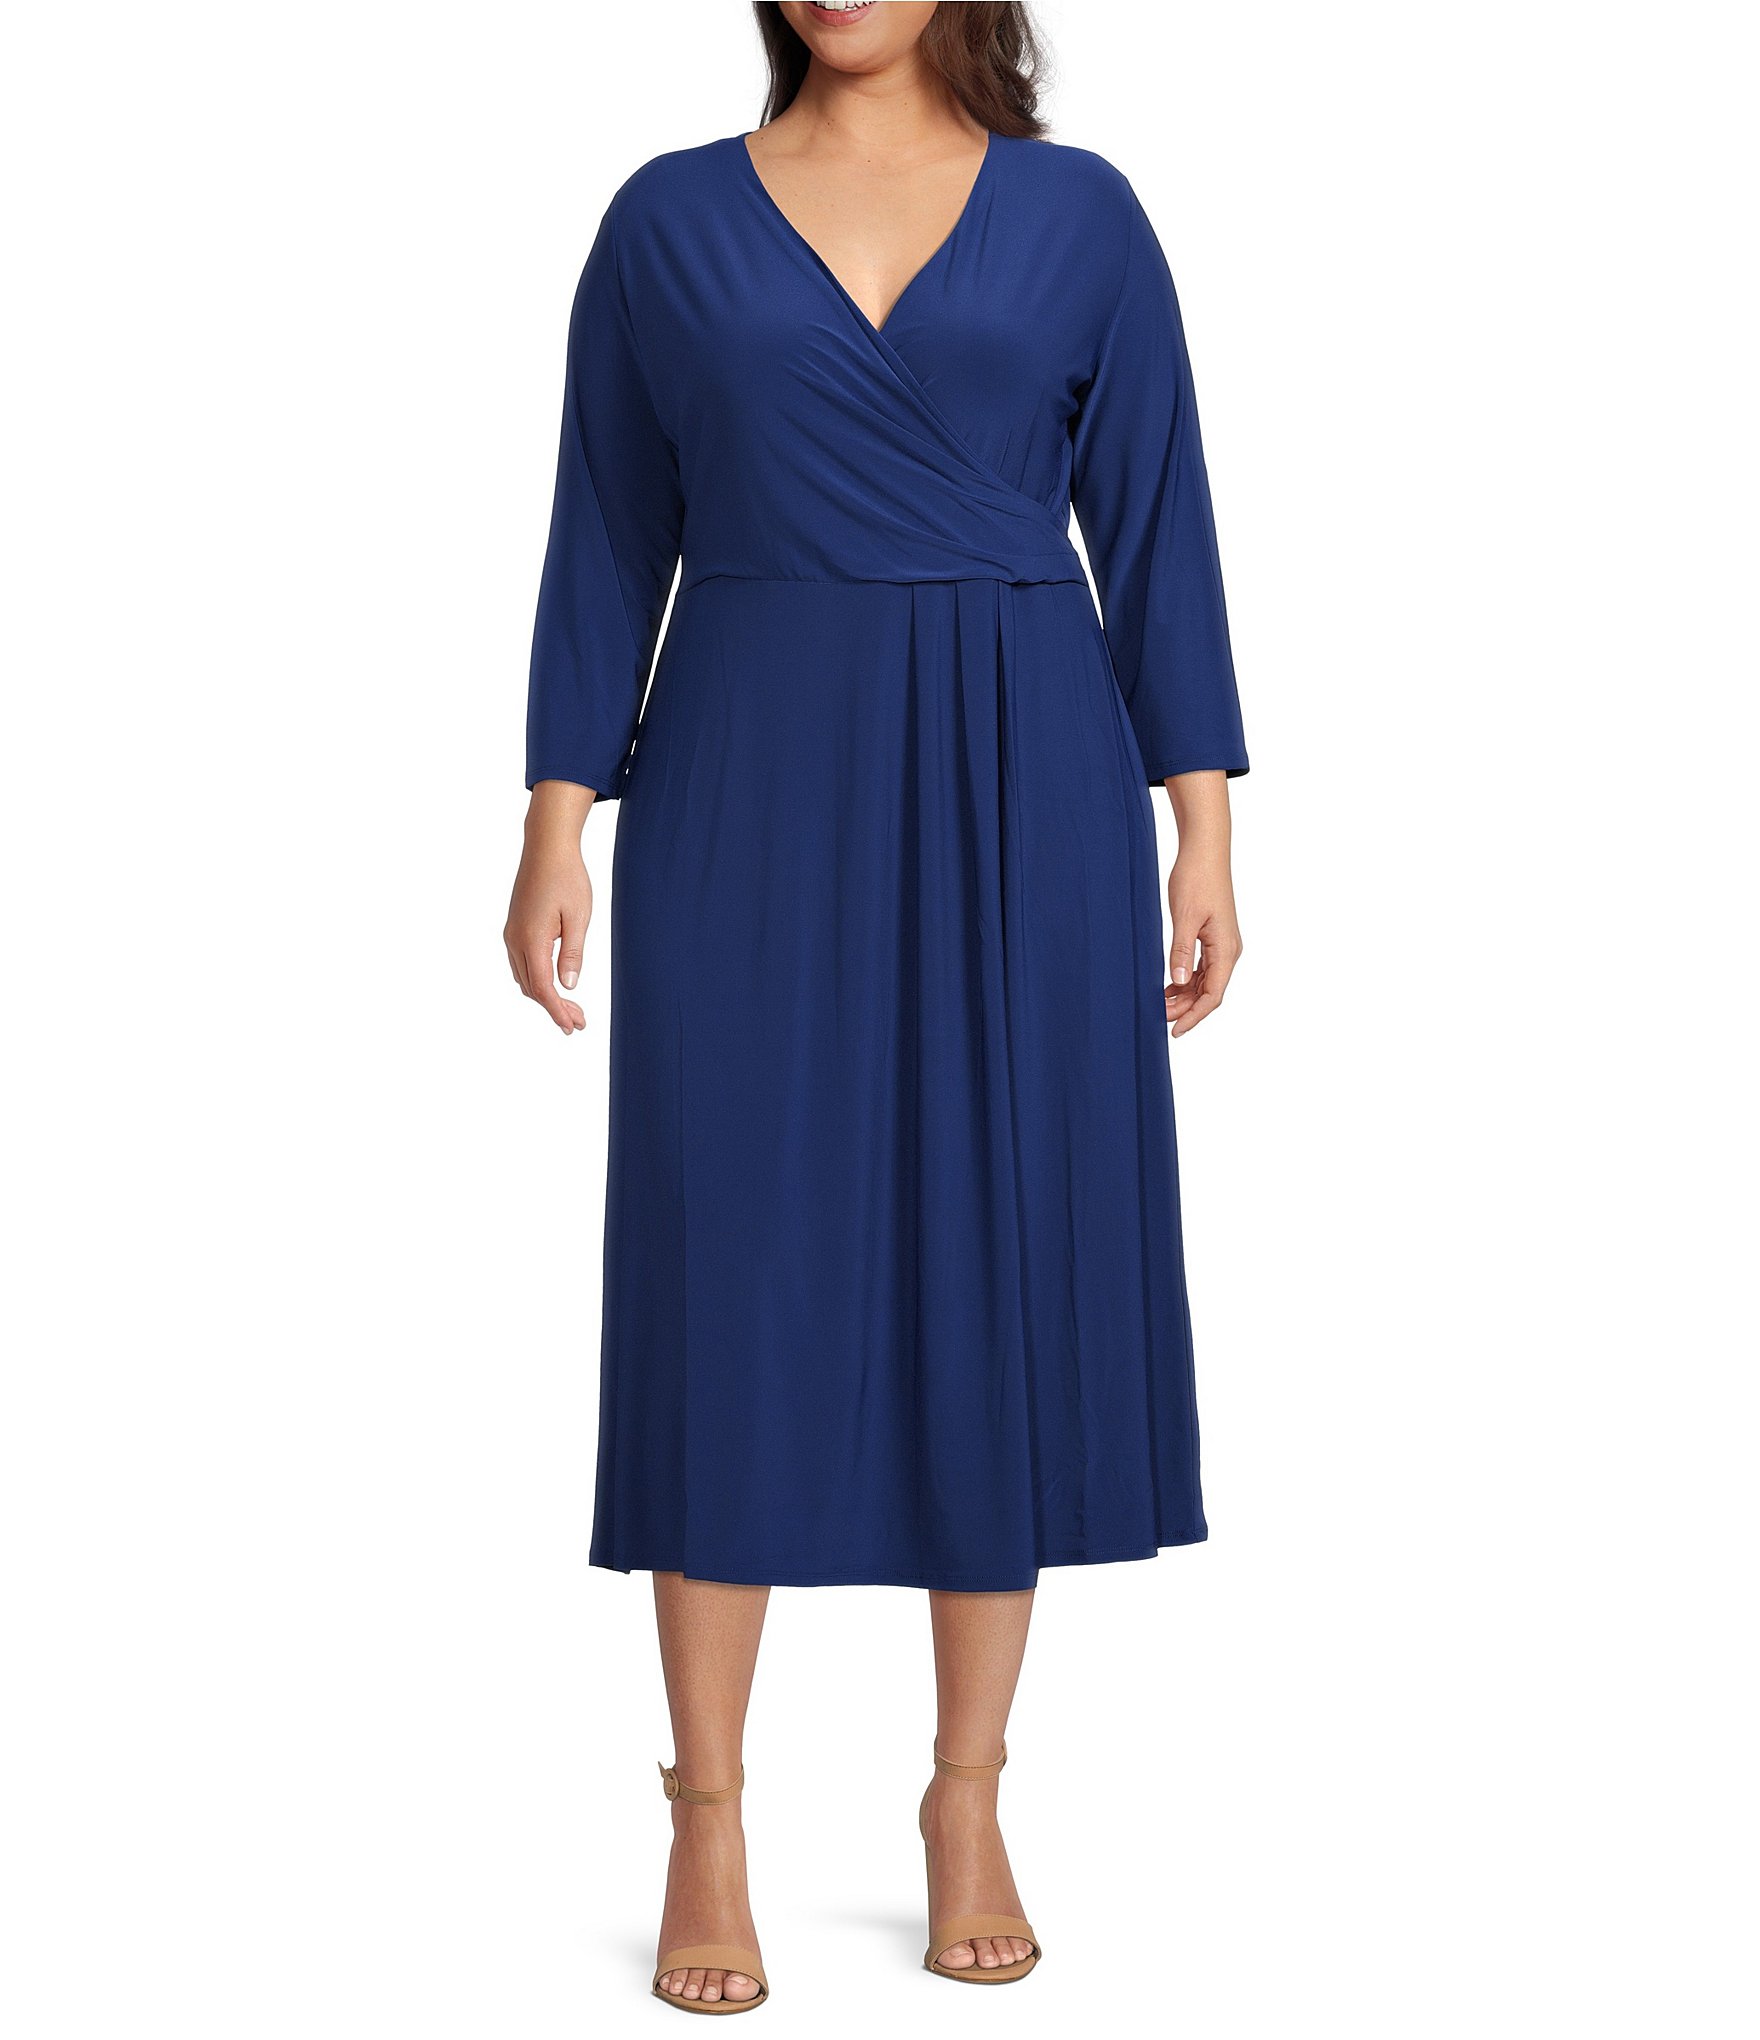 Plus-Size Daytime & Casual Dresses | Dillard's